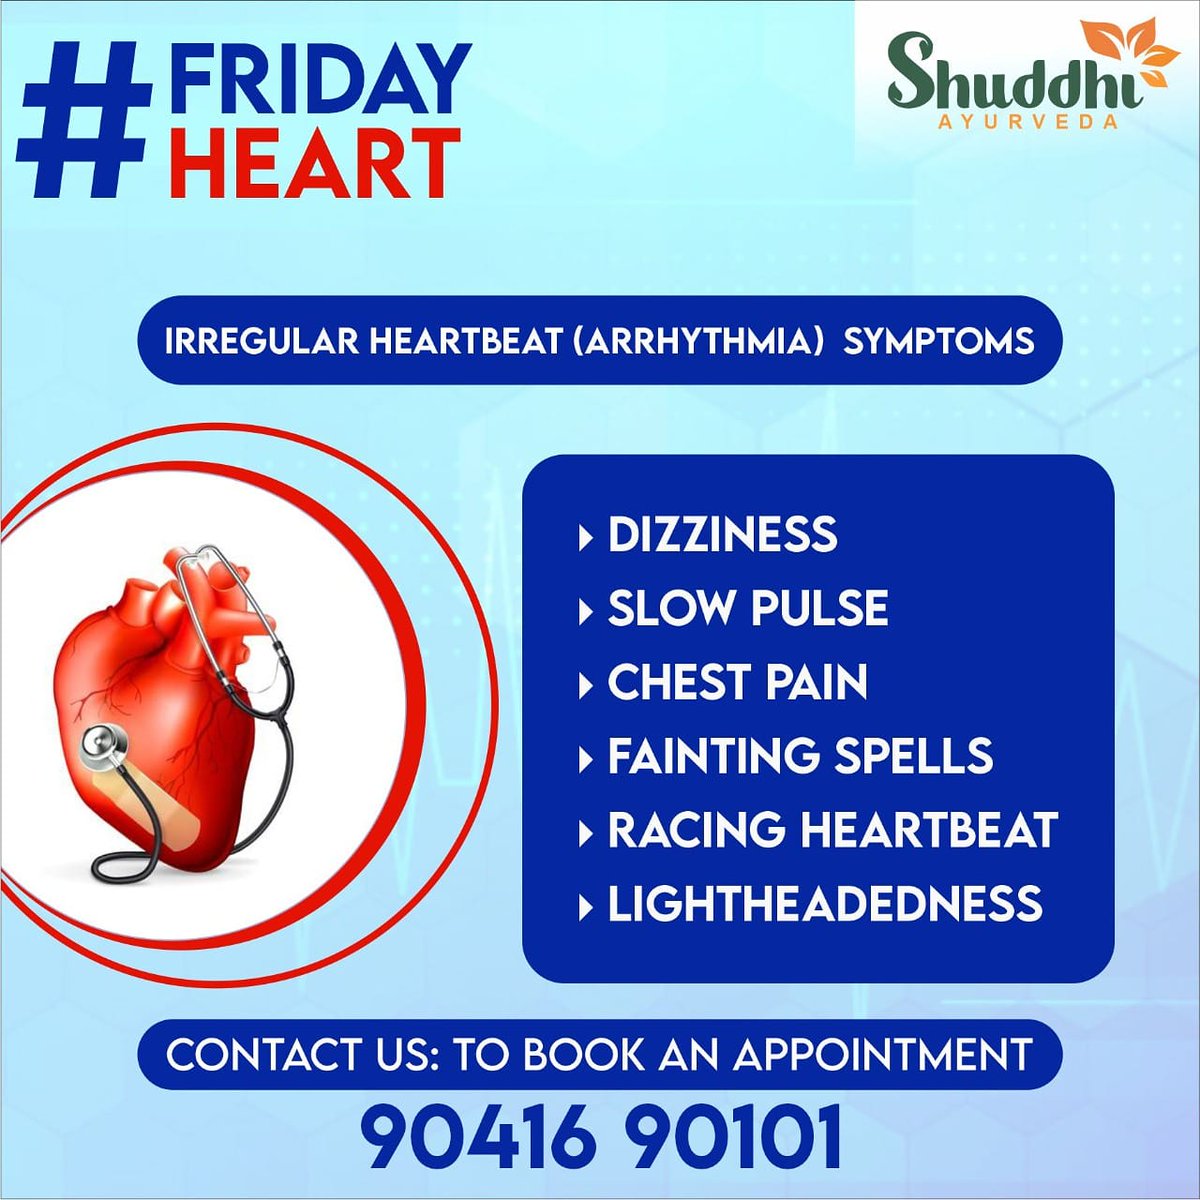 Irregular heartbeat symptoms

✔150+ Clinics In India ✔No Side effect ✔Free Doctor Consultation

Call us - 9041690101

#fitness #AyurvedicMedicine #AyurvedicTreatment #yoga #healthandfitnesstips #honey #Weightloss #SuryaNamaskar #ShuddhiAyurveda #acharyamanish #friday #heart